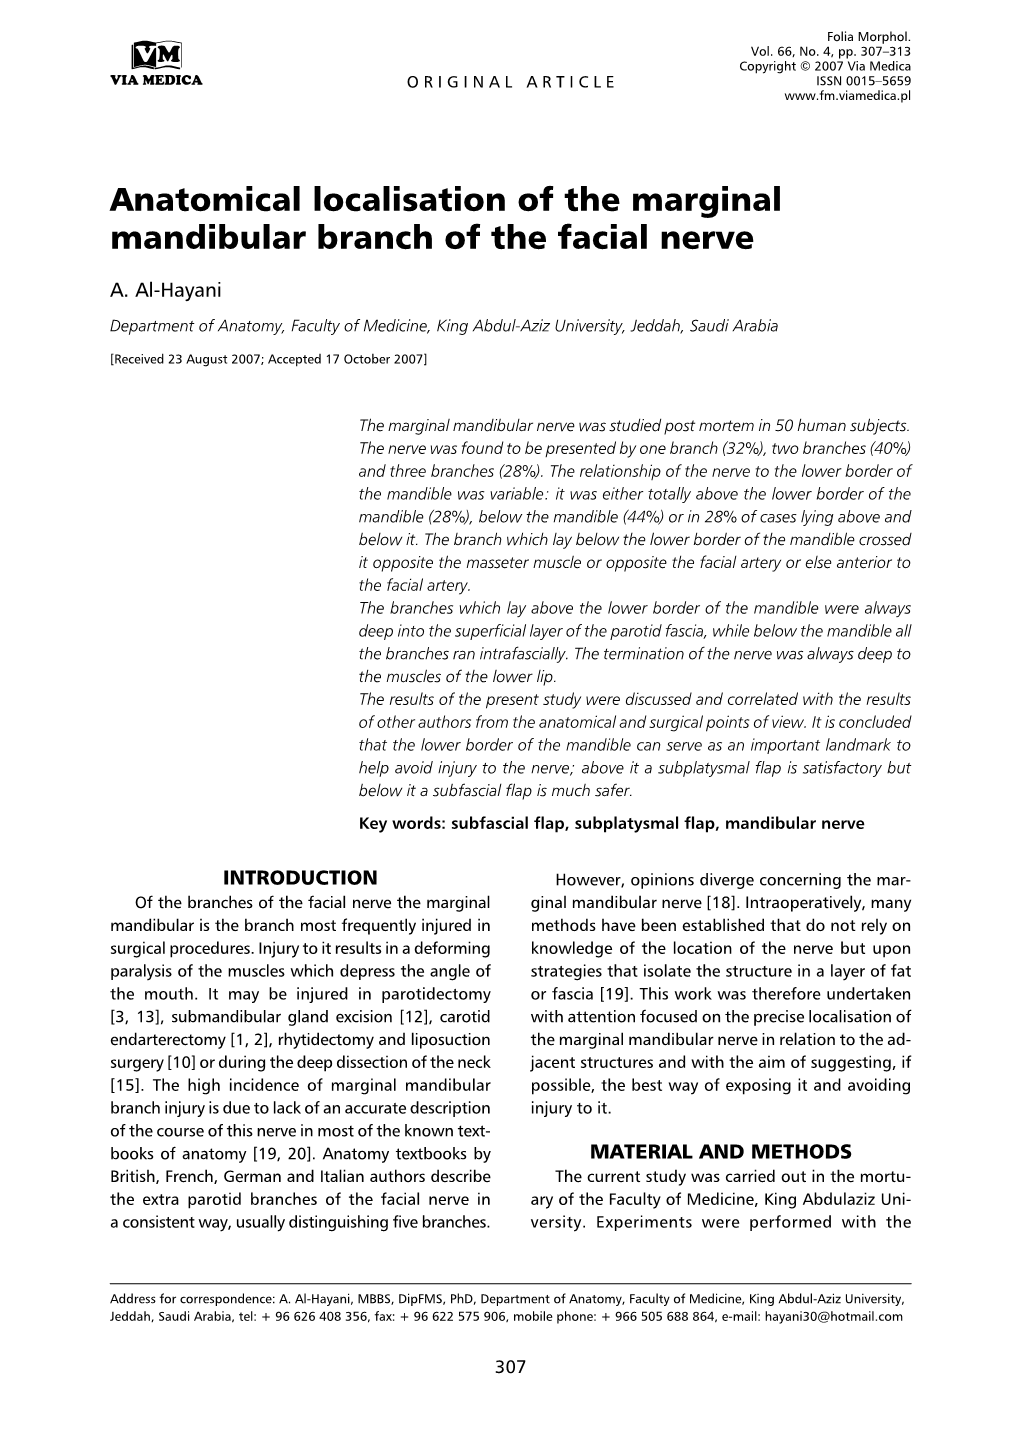 Anatomical Localisation of the Marginal Mandibular Branch of the Facial Nerve